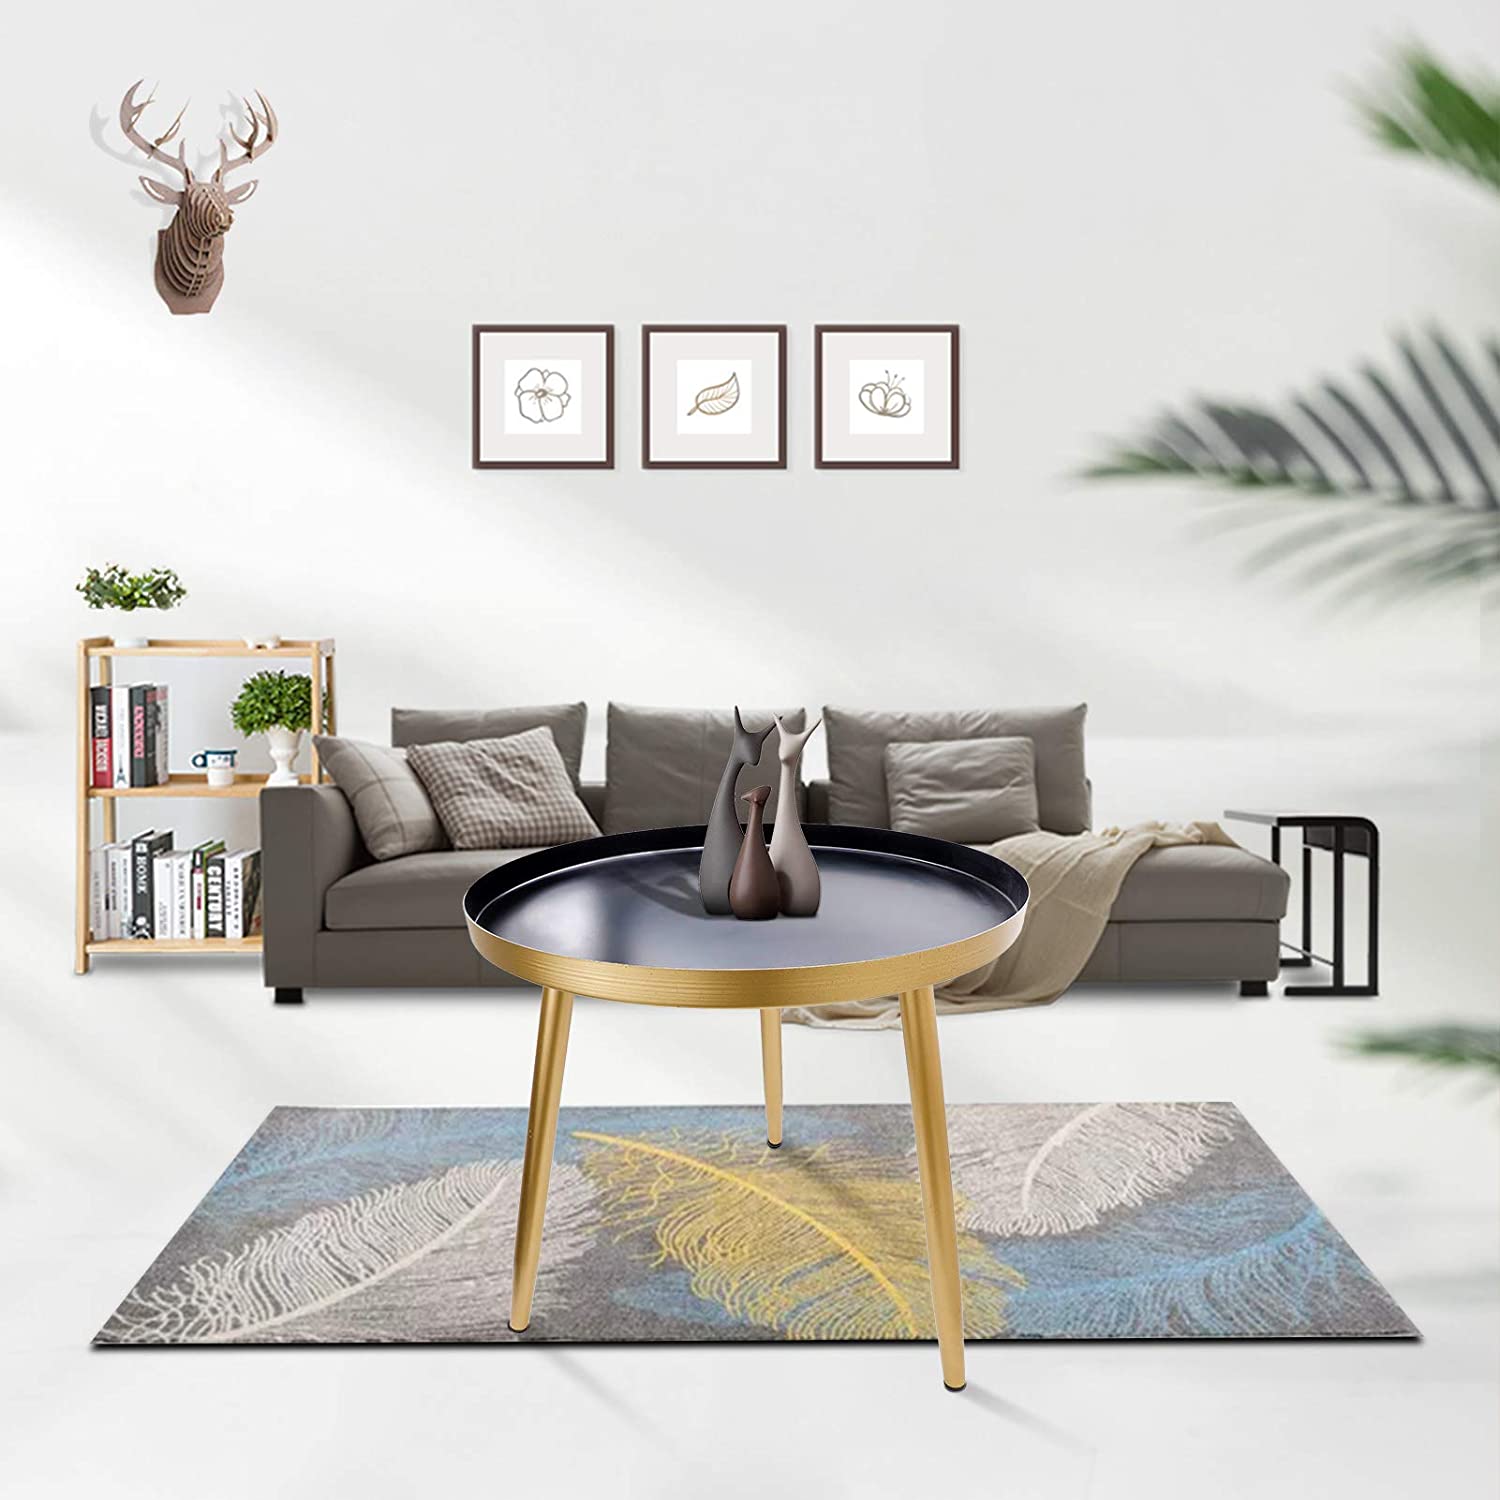 Round Side Metal Table, Tea Sofa Table for Living Room Bedroom,Anti-Rust and Waterproof, Black - image 5 of 8